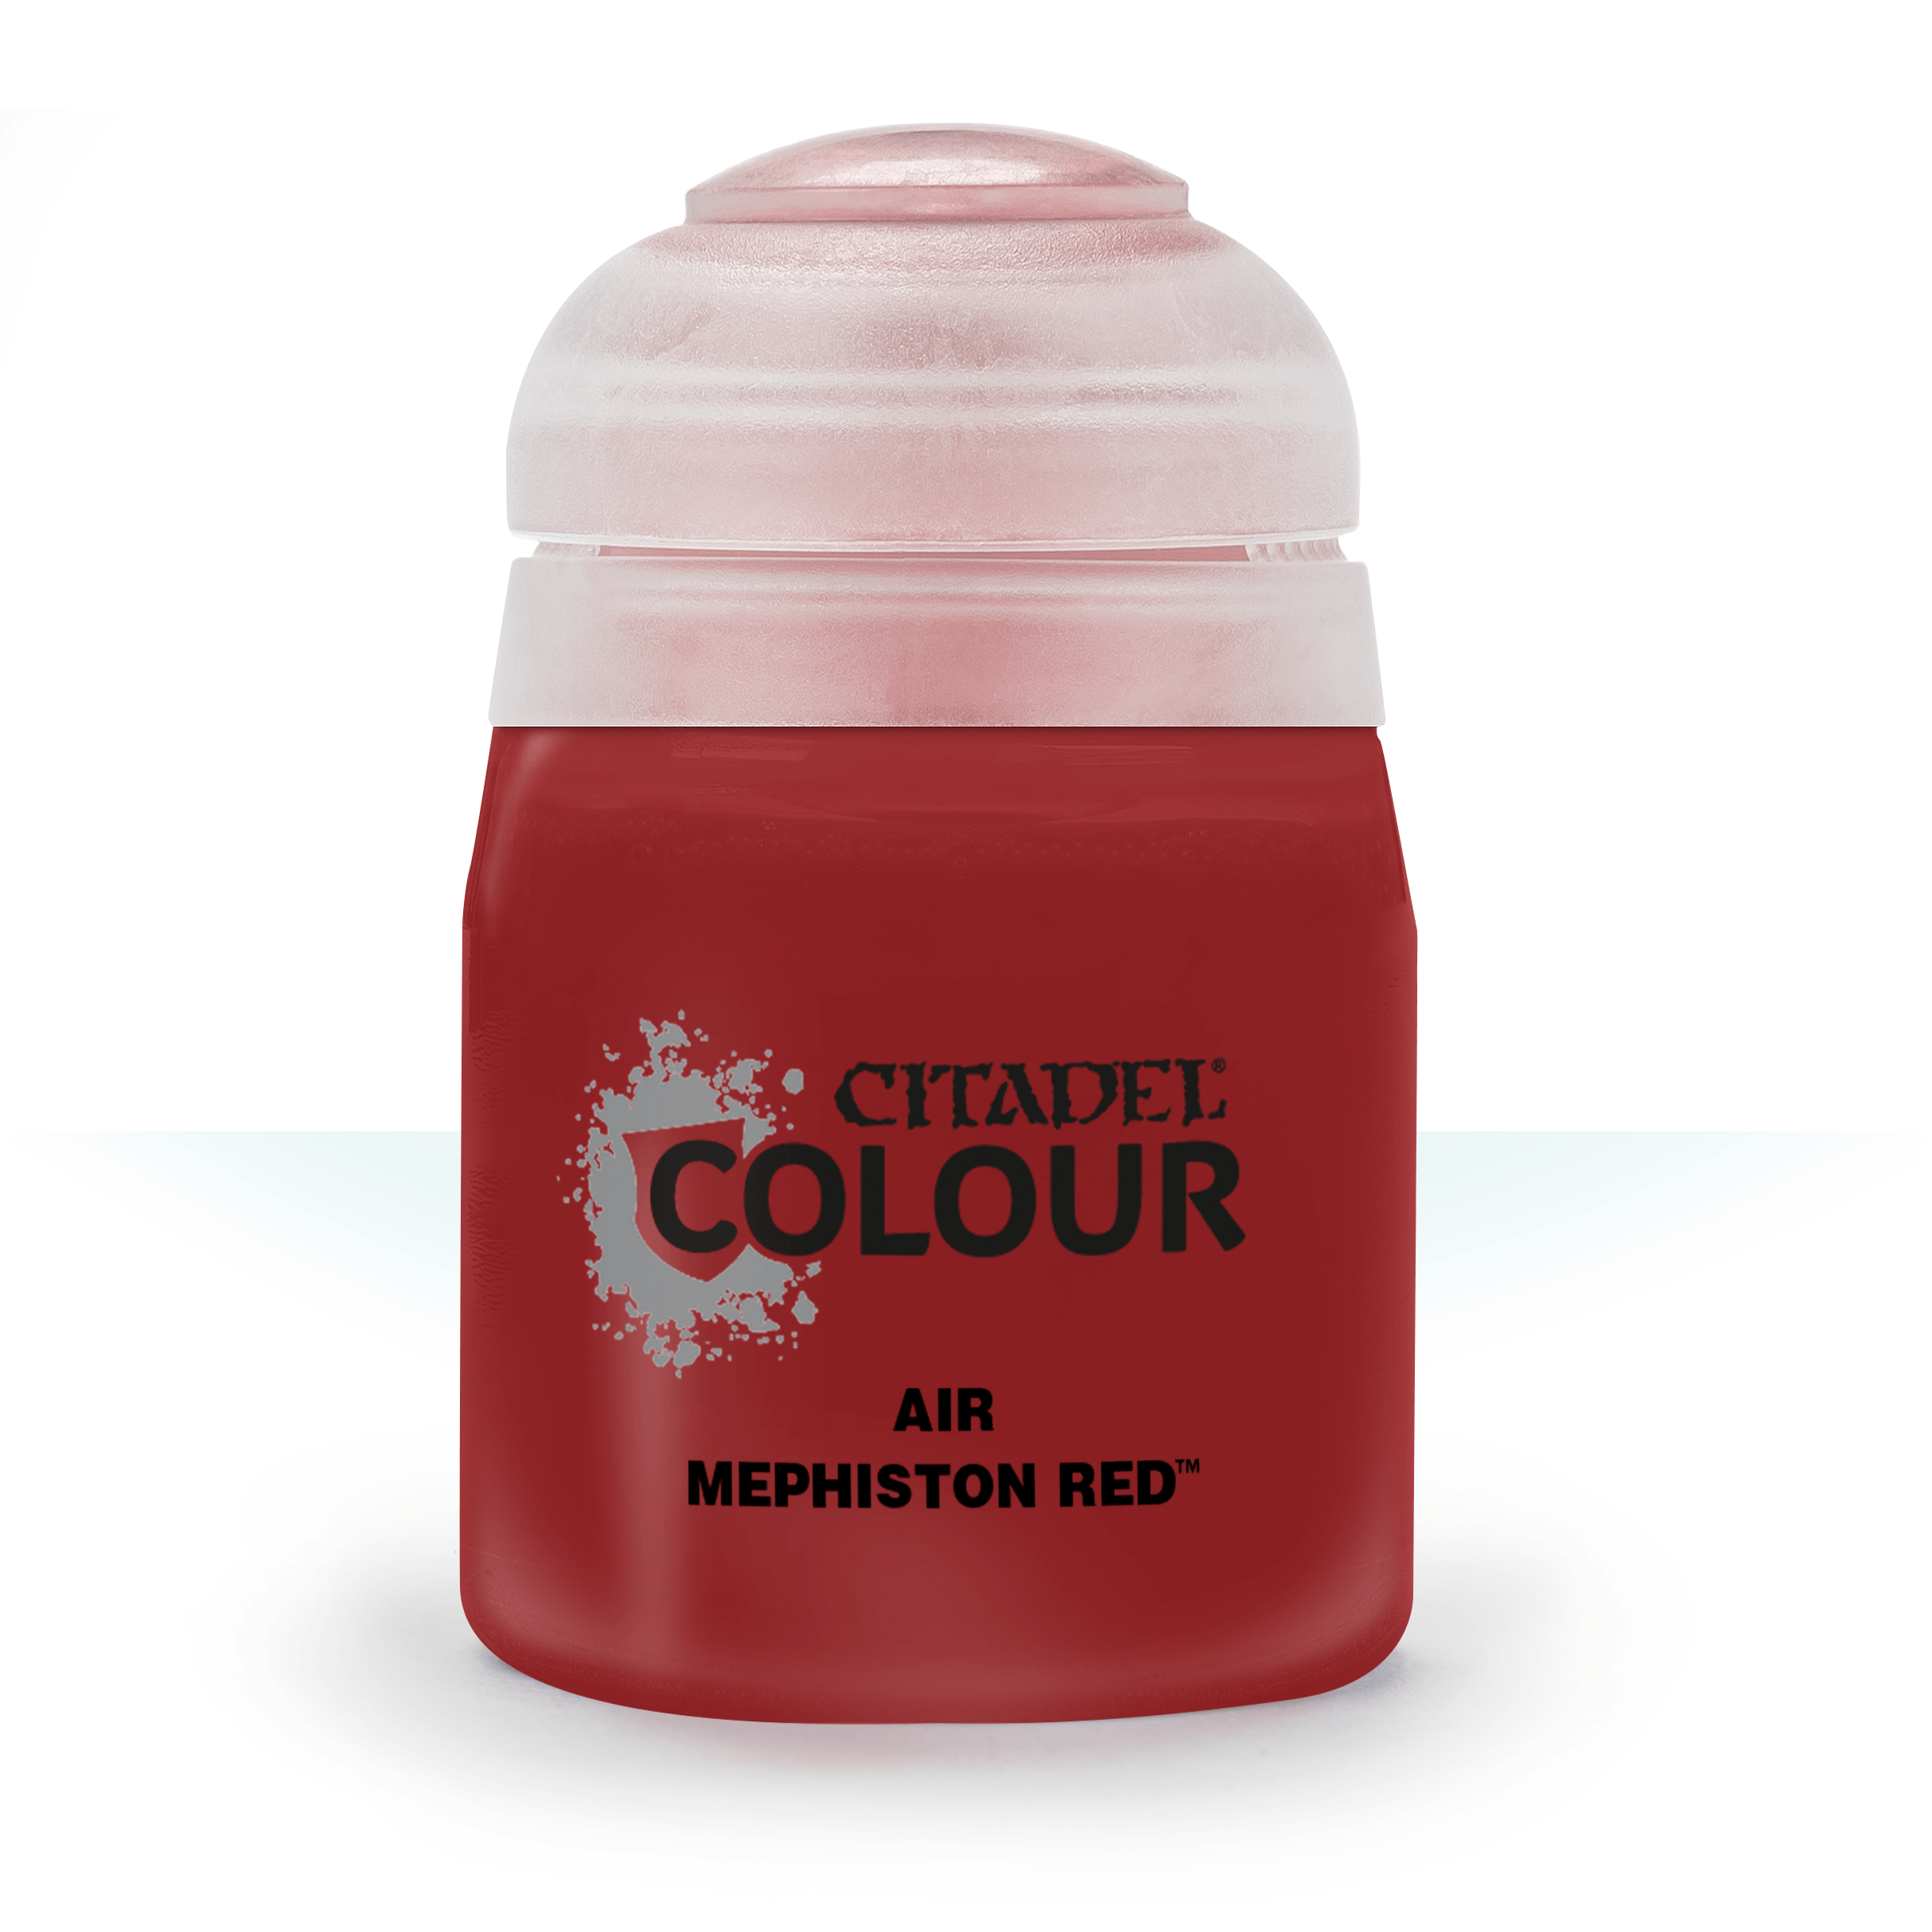 Air Mephiston Red - Citadel Colour - 24 ml